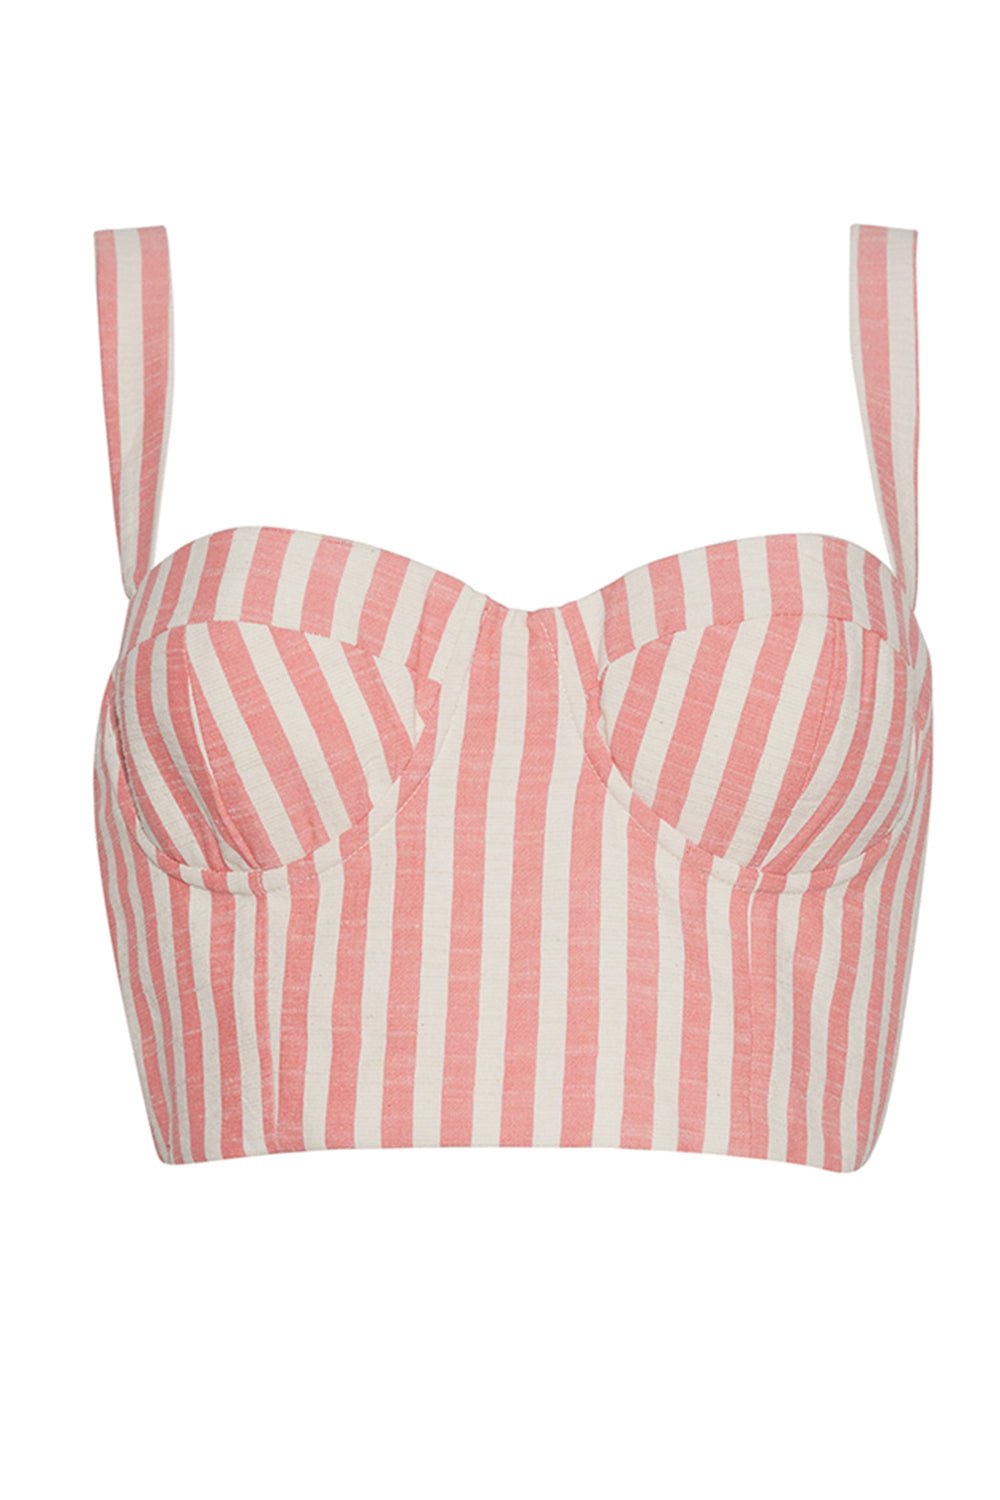 CARA CARA-Claudine Top - Ivory Pink Stripe-